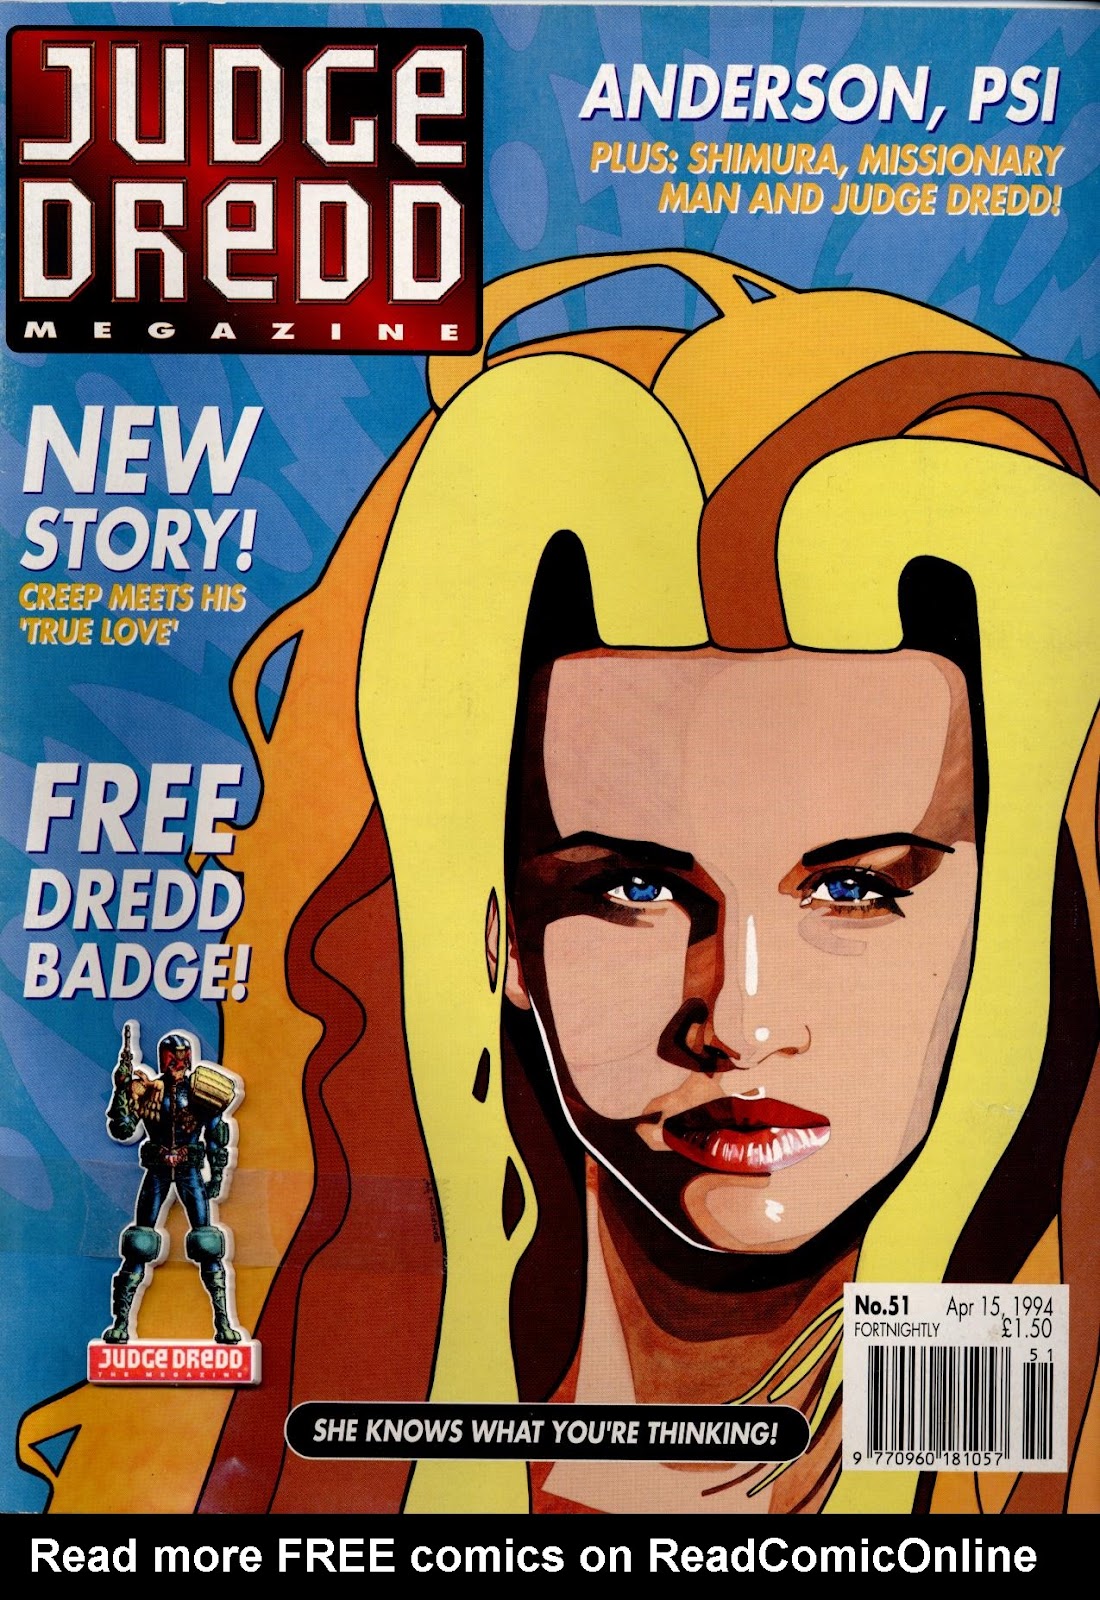 Judge Dredd: The Megazine (vol. 2) issue 51 - Page 1